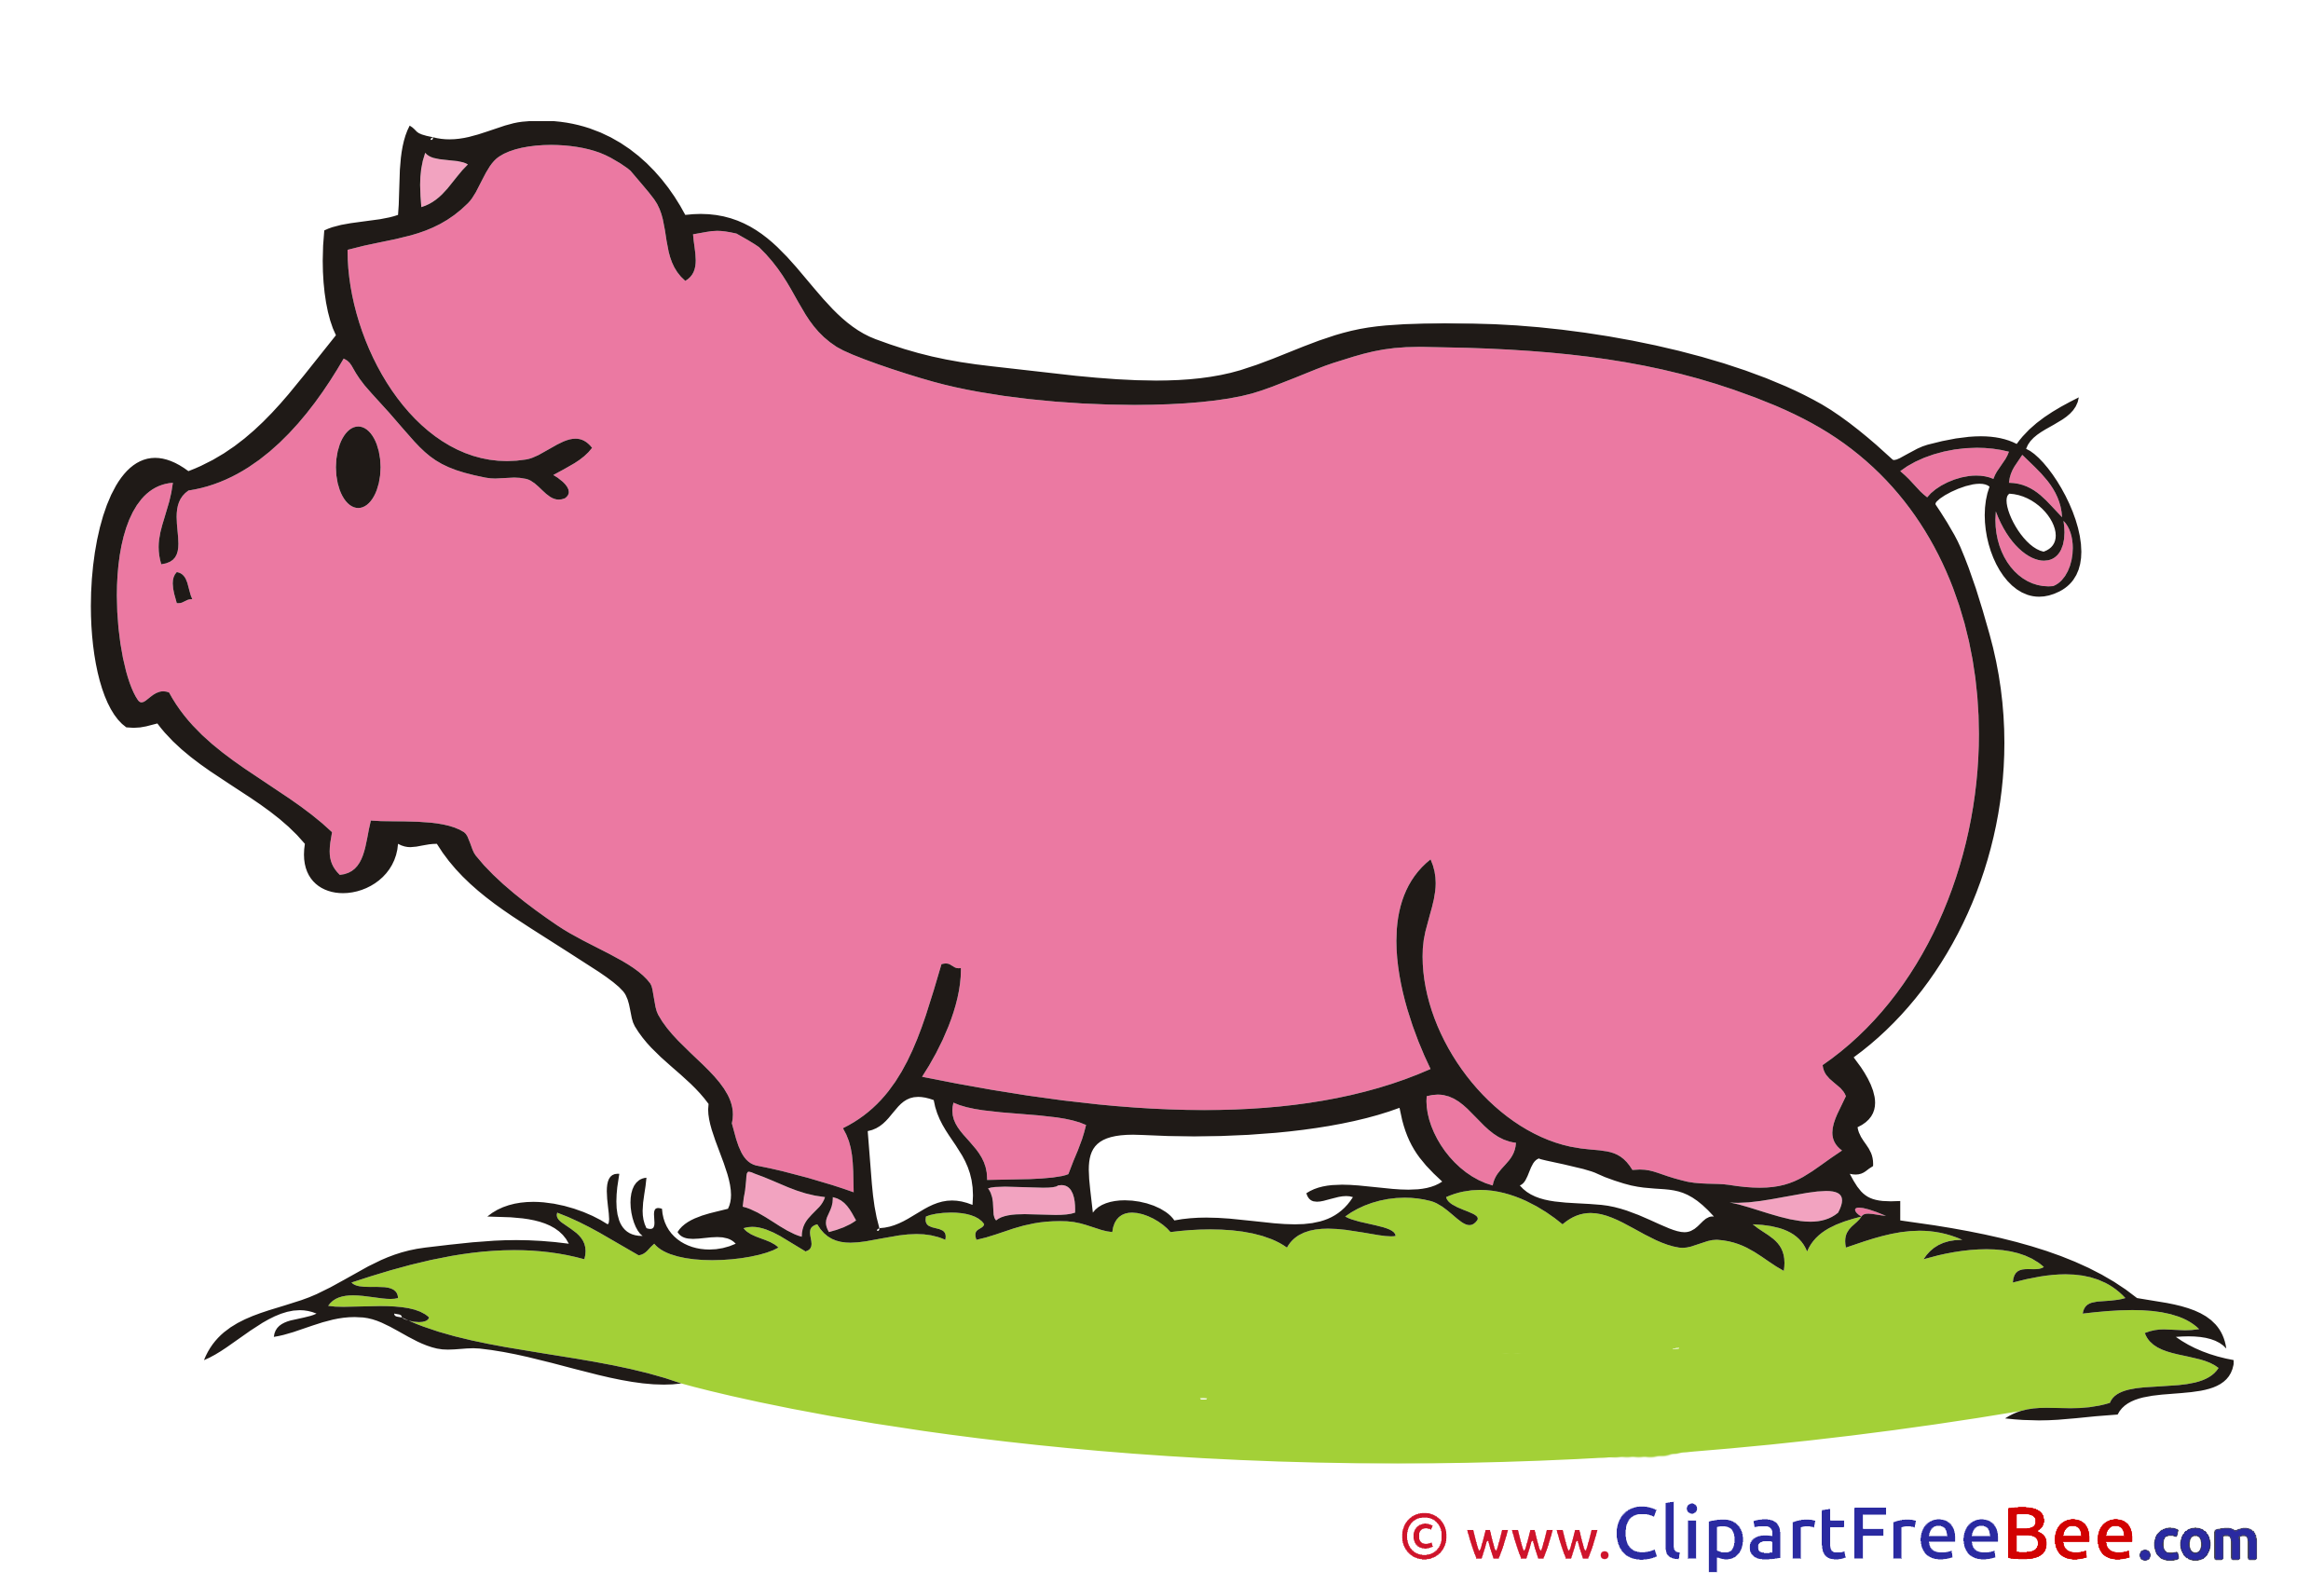 Pig Grass Pics free Illustration